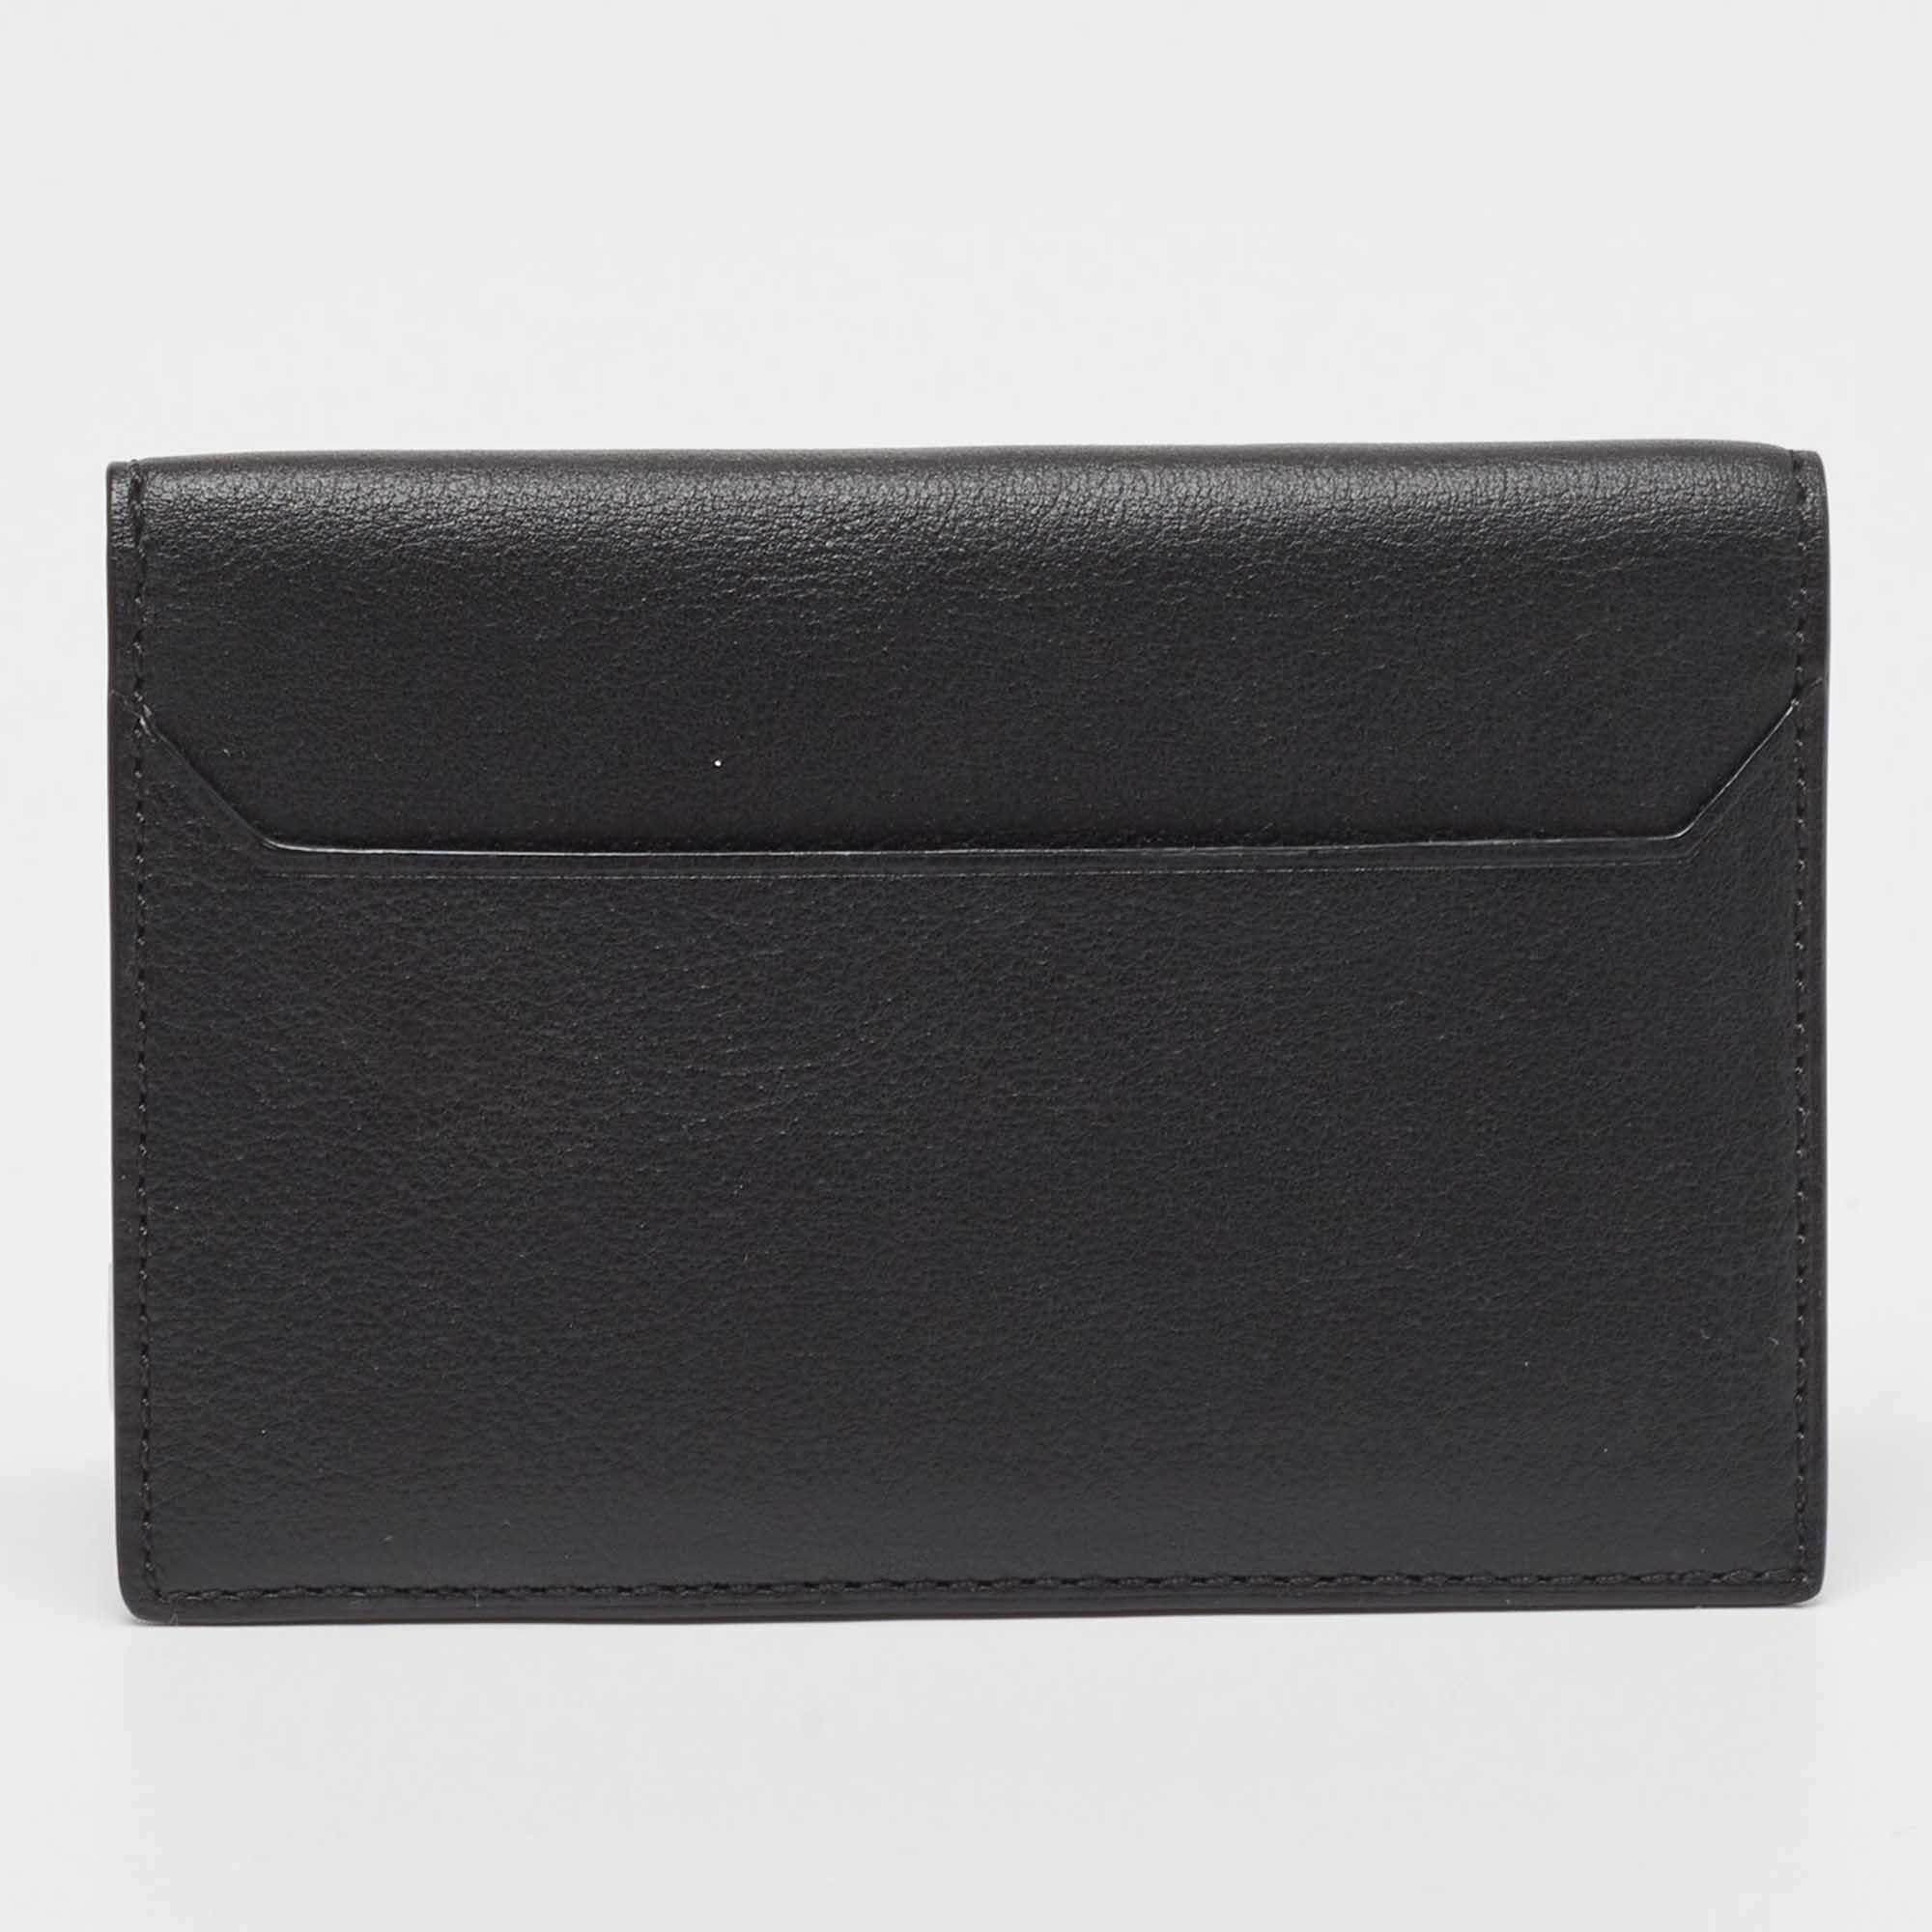 Cartier Black Leather Must De Cartier Card Holder 4